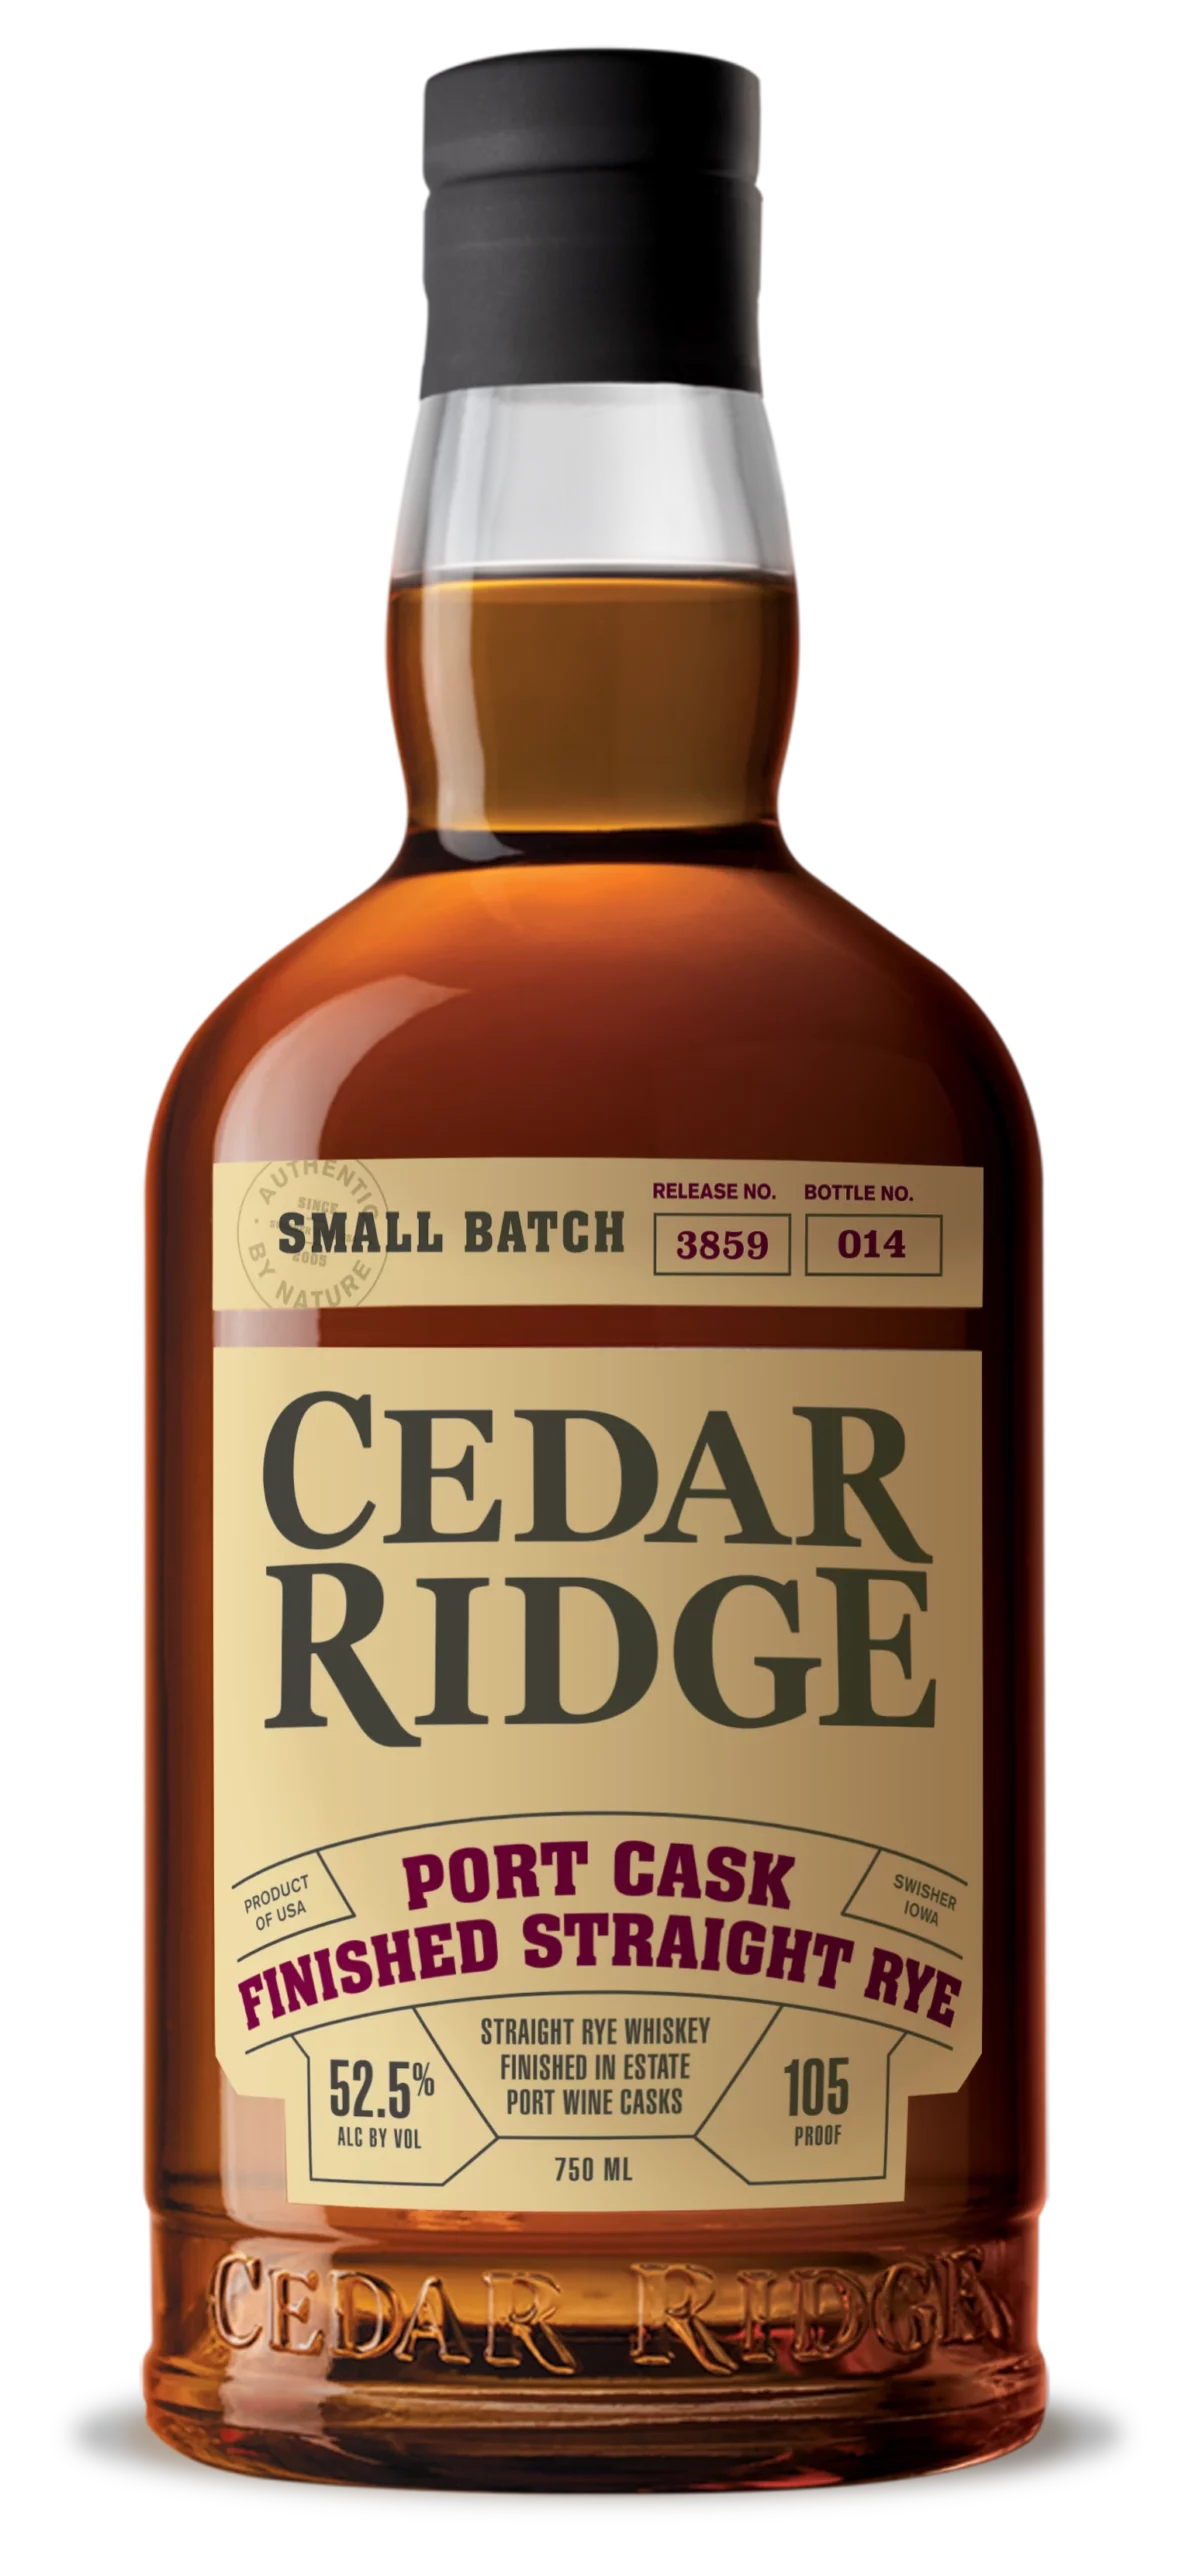 Cedar Ridge Port Cask Finished Straight Rye